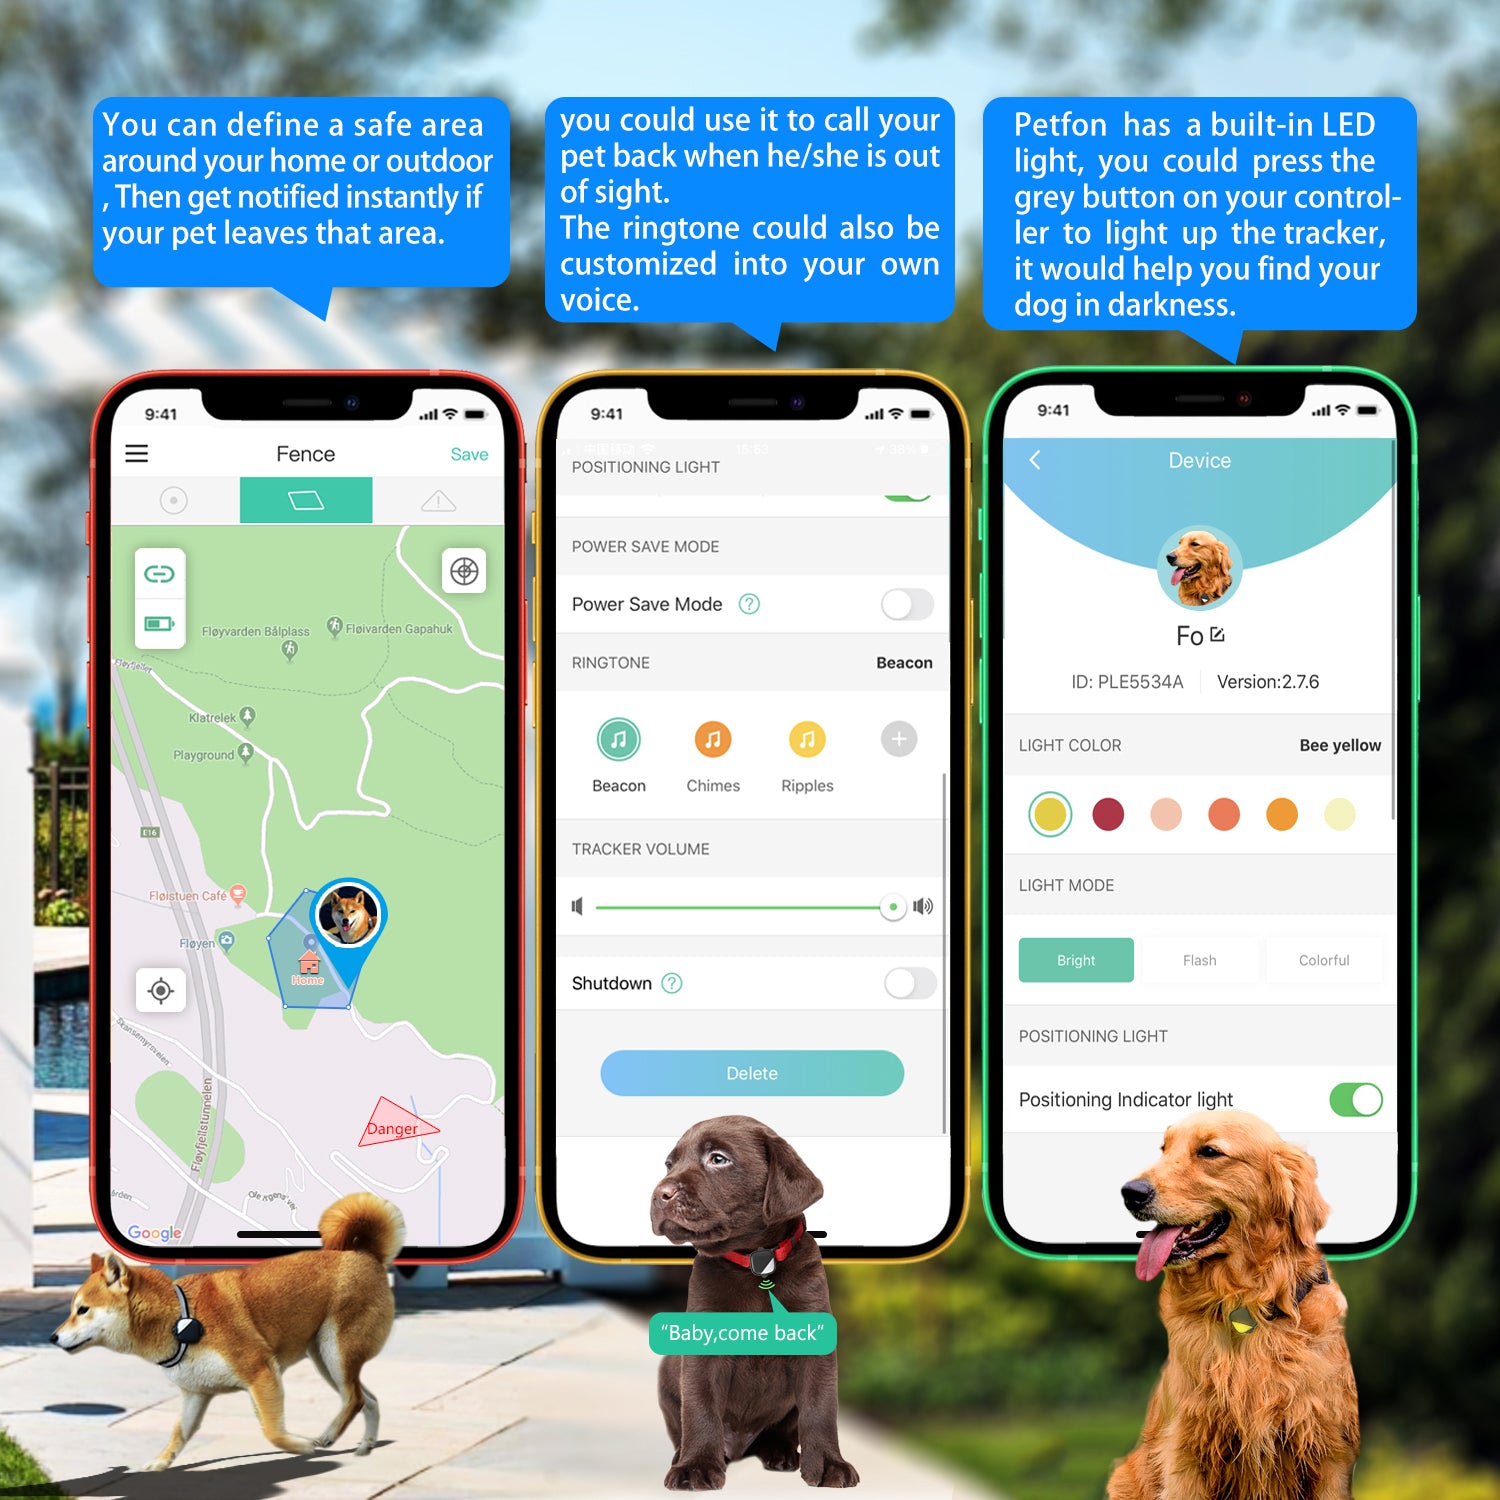 PETFON2 (Smart tracker for 2 dogs)